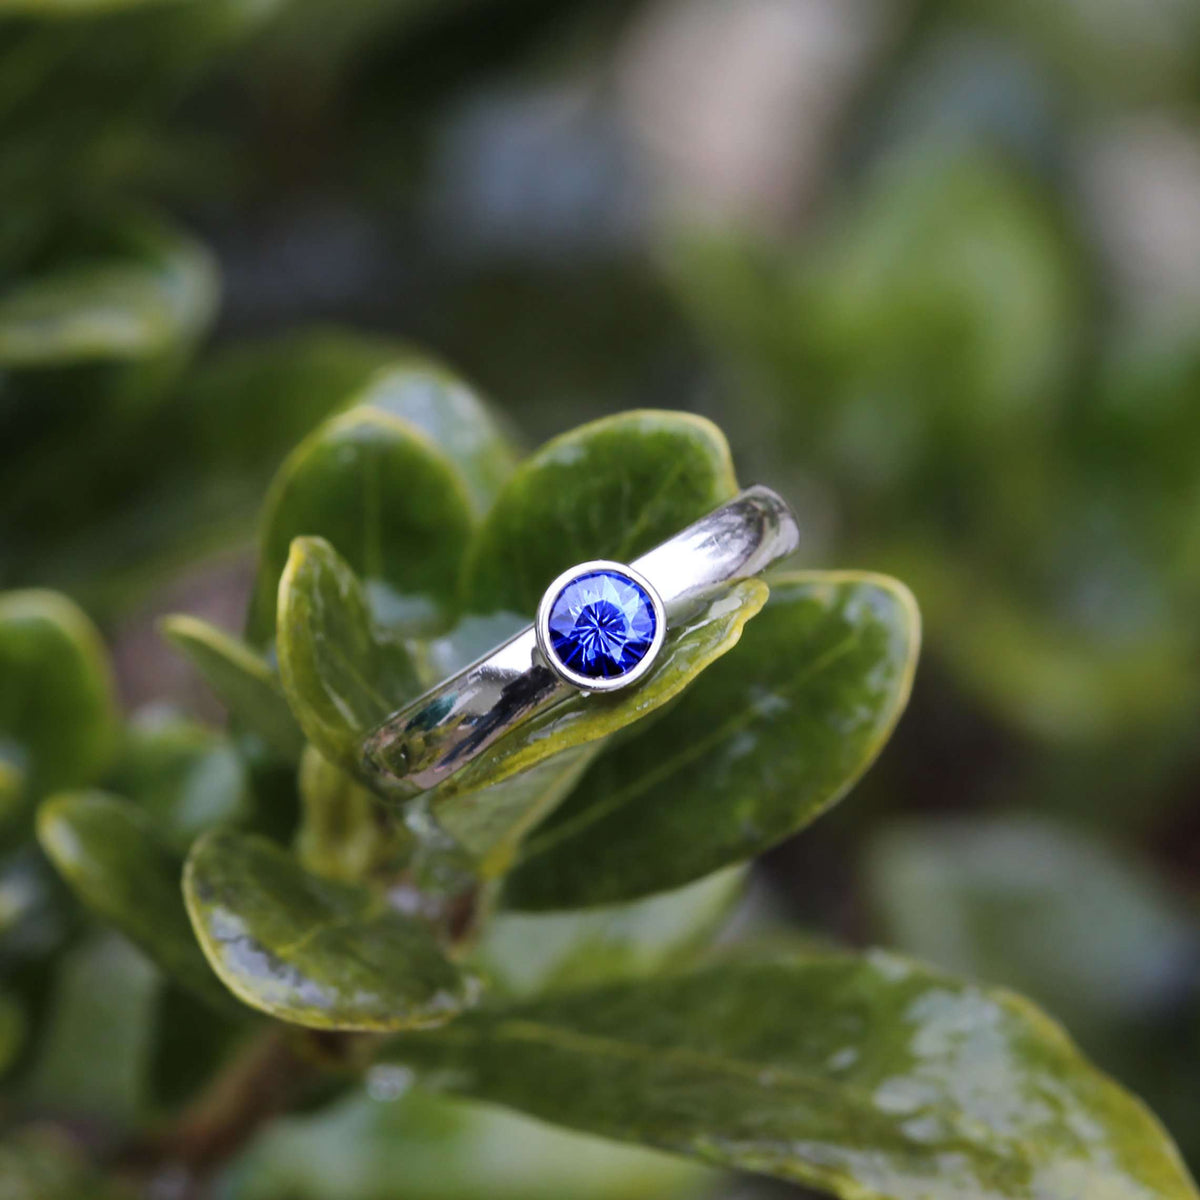 Natural Ceylon Blue Sapphire Ring | White Gold